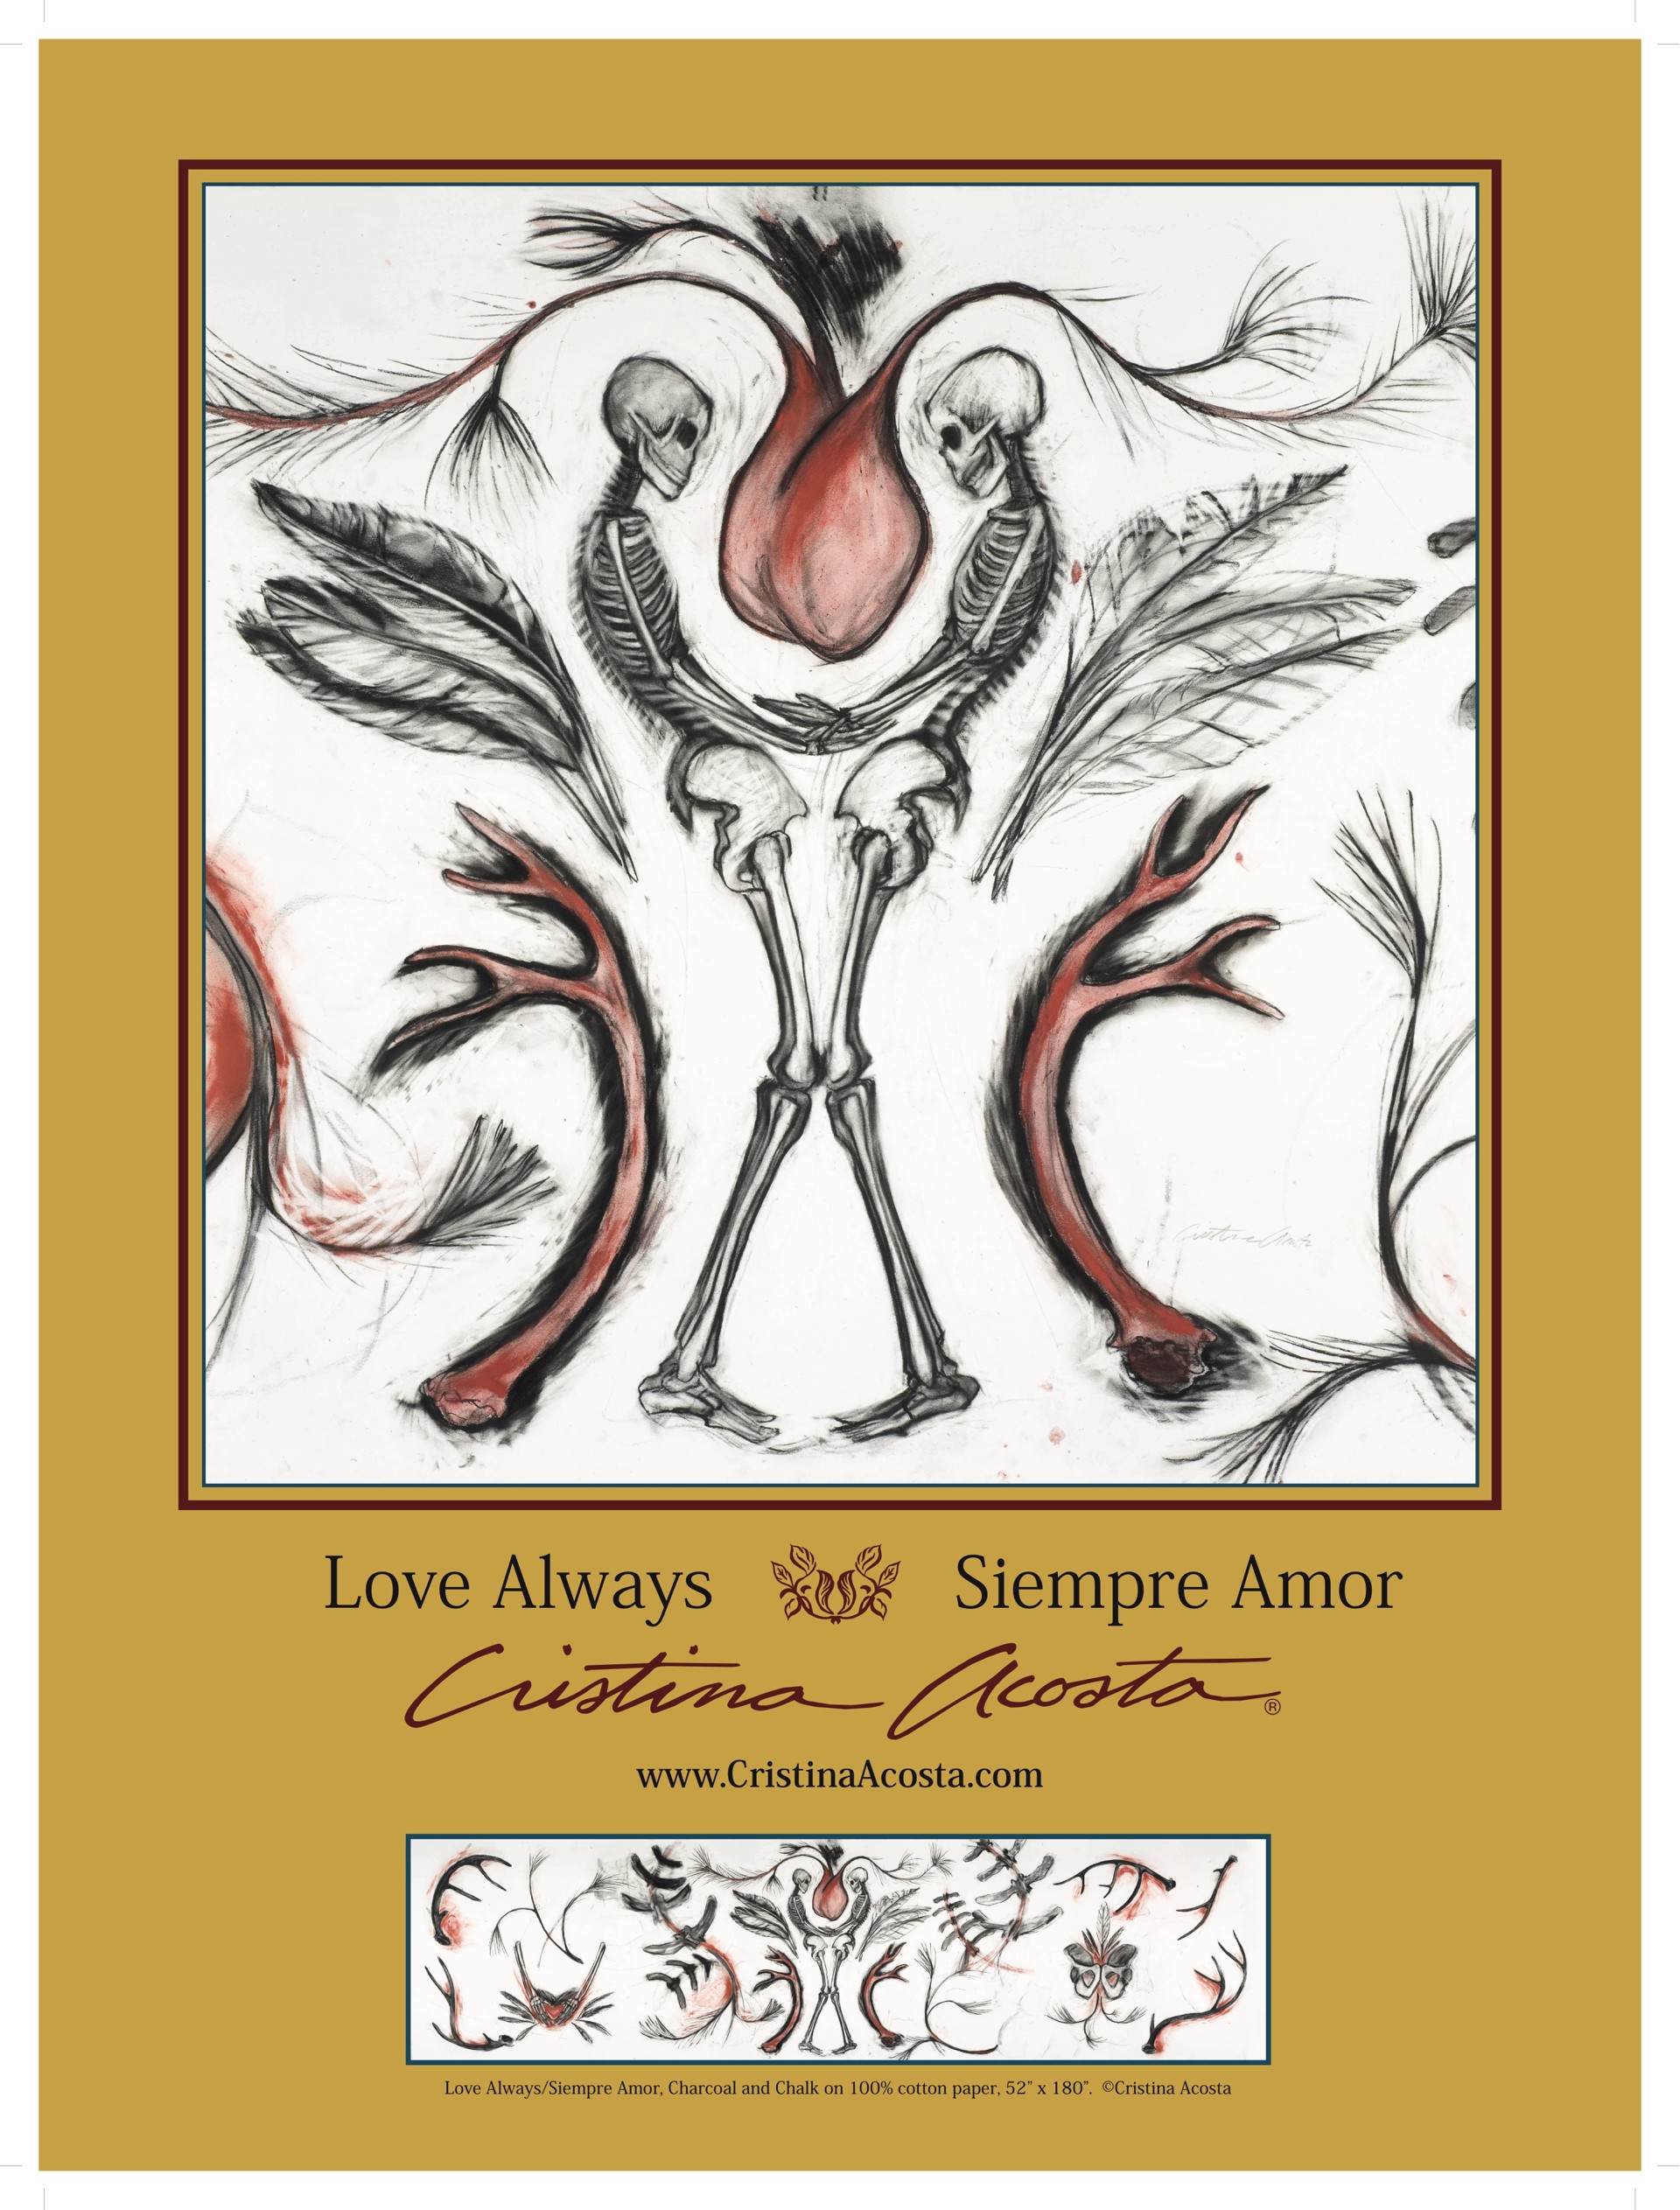 Love Always, Siempre Amor 2013 by Cristina Acosta